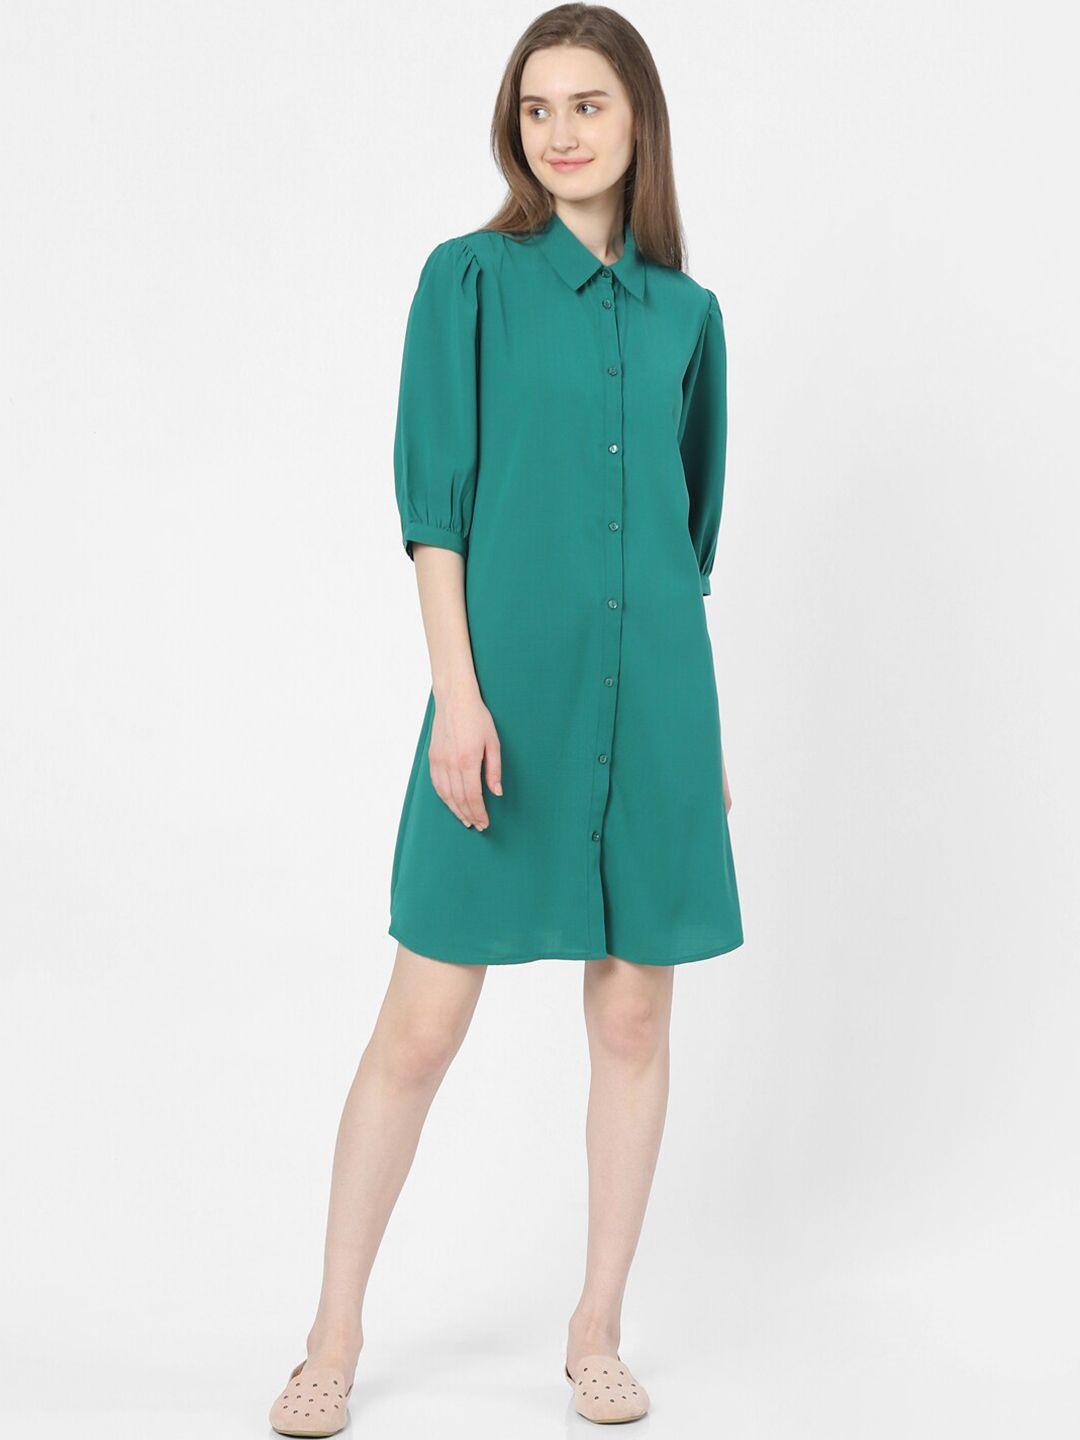 vero moda women green polyester shirt style dress